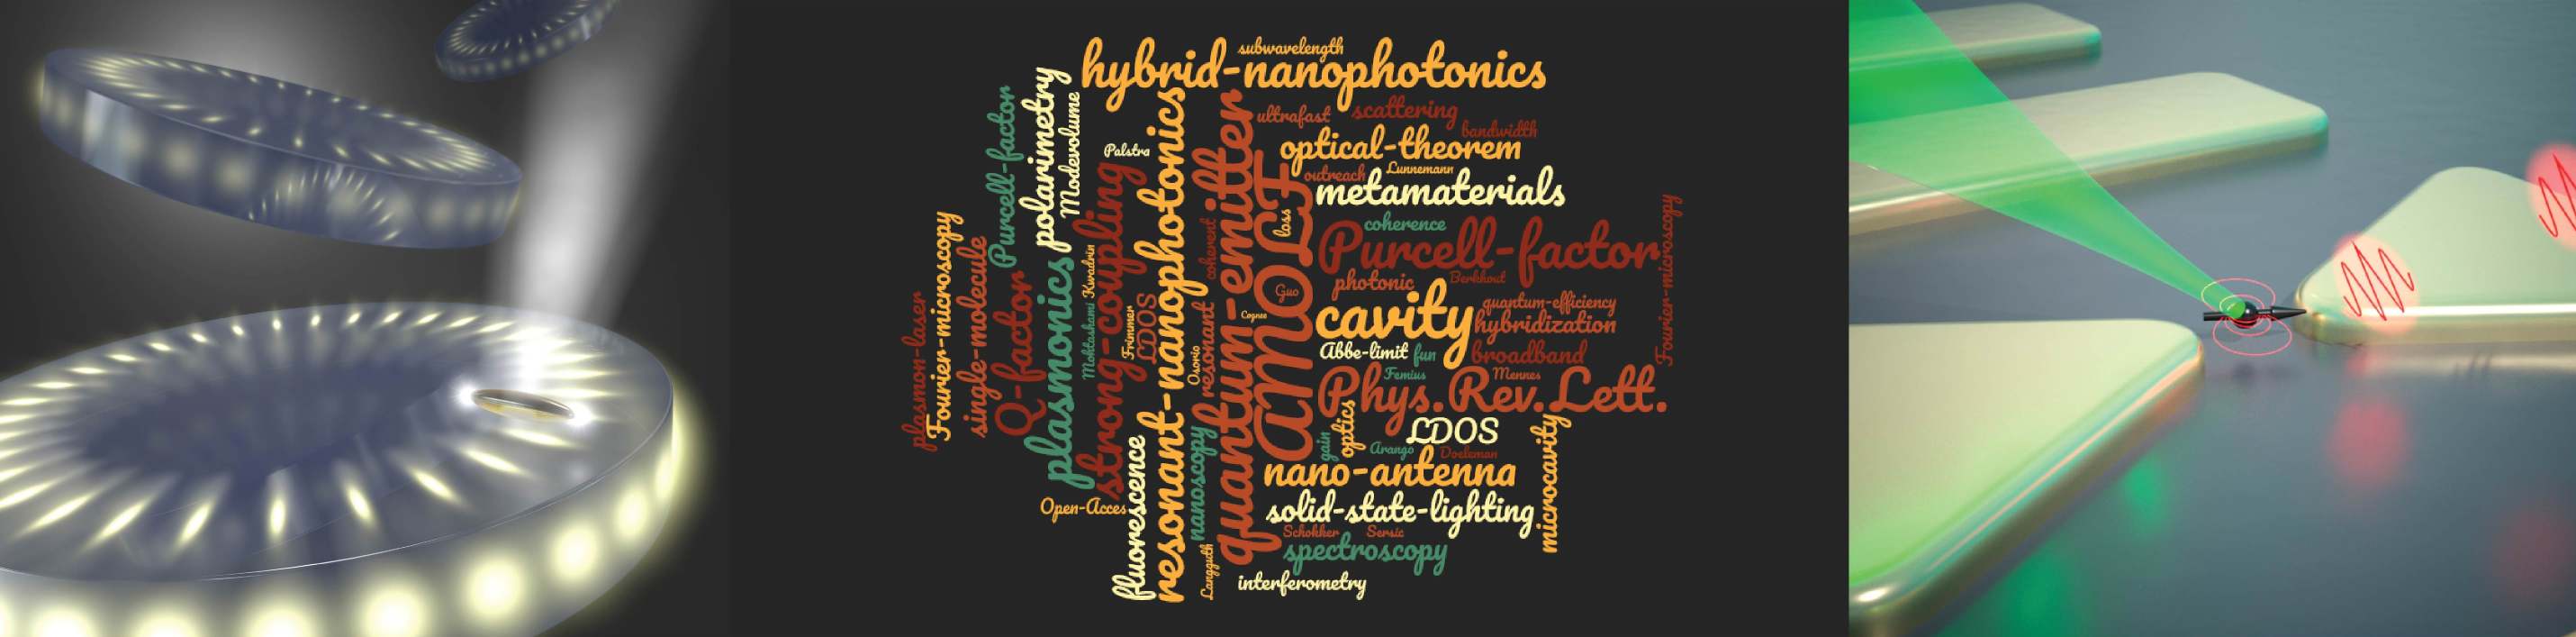 Recent highlights - Resonant Nanophotonics at AMOLF